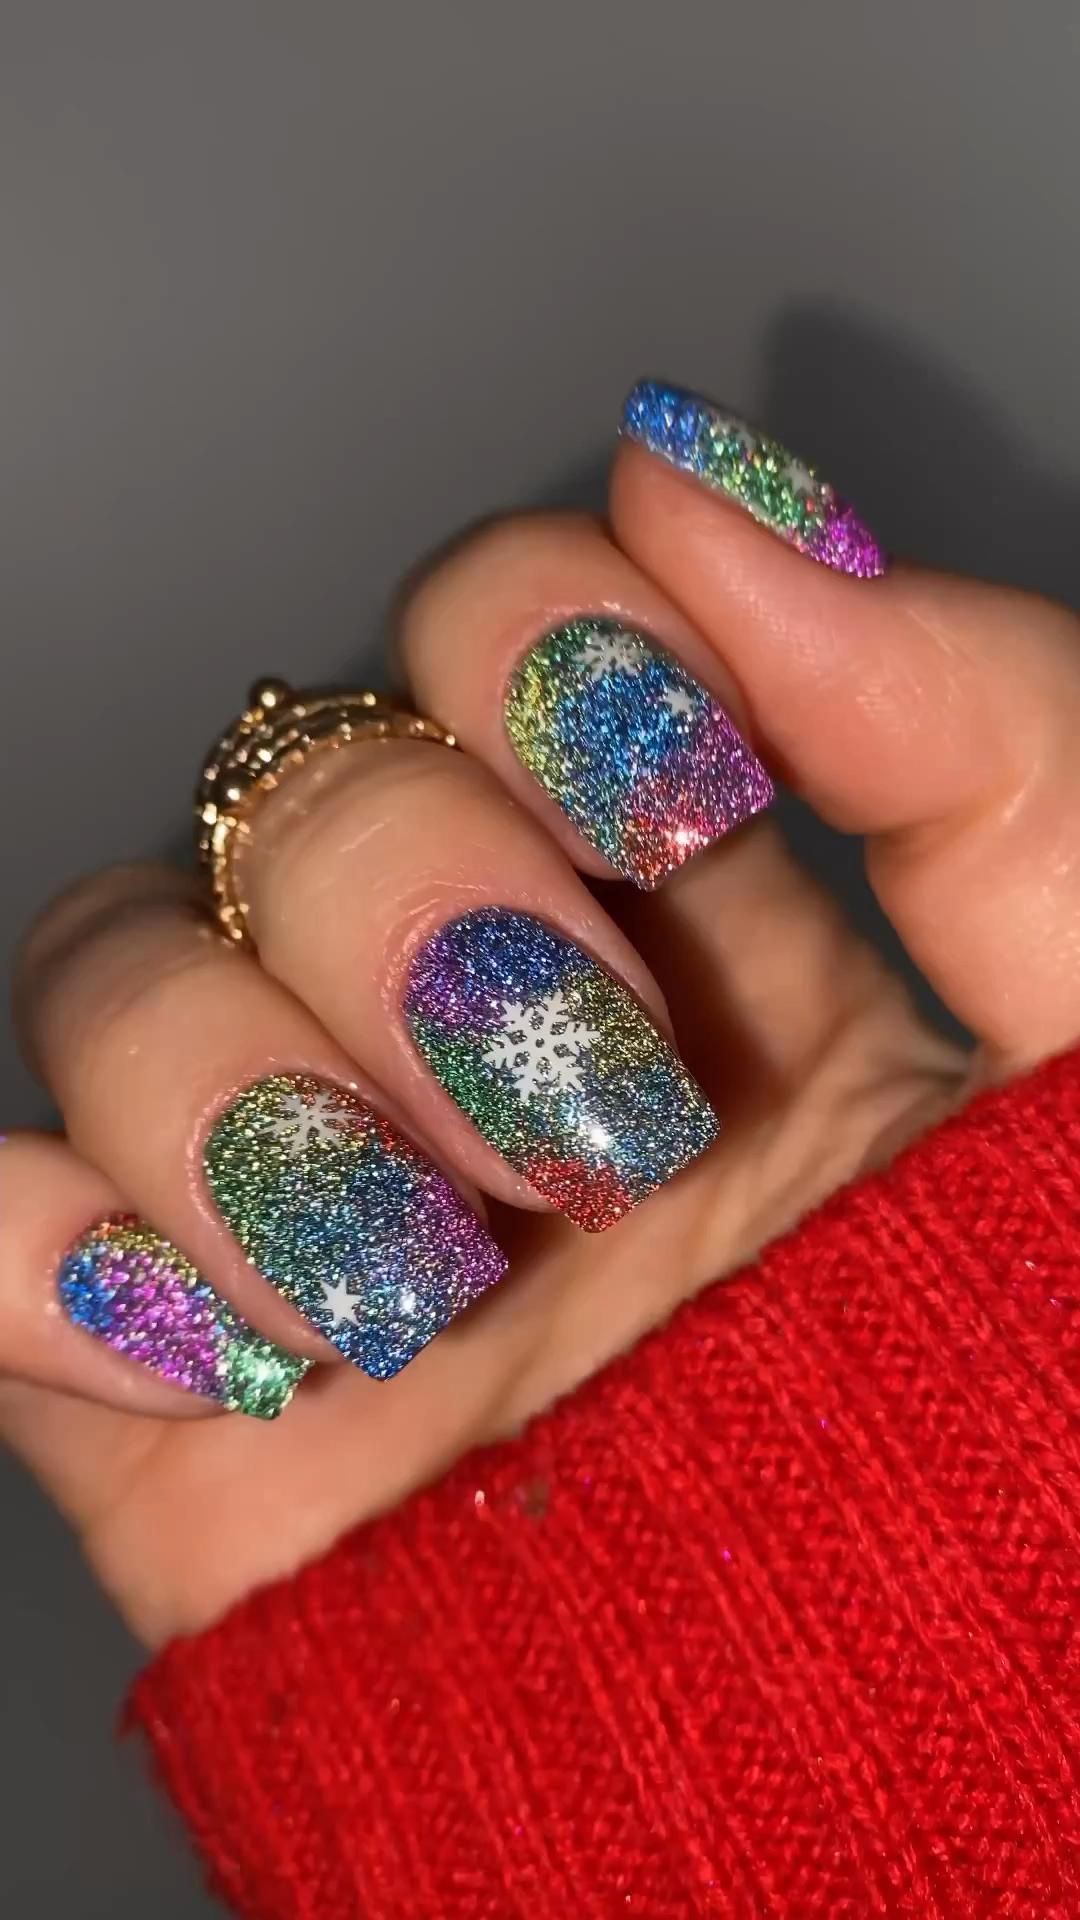 Galaxy-Inspired Glittery Nails
  Design